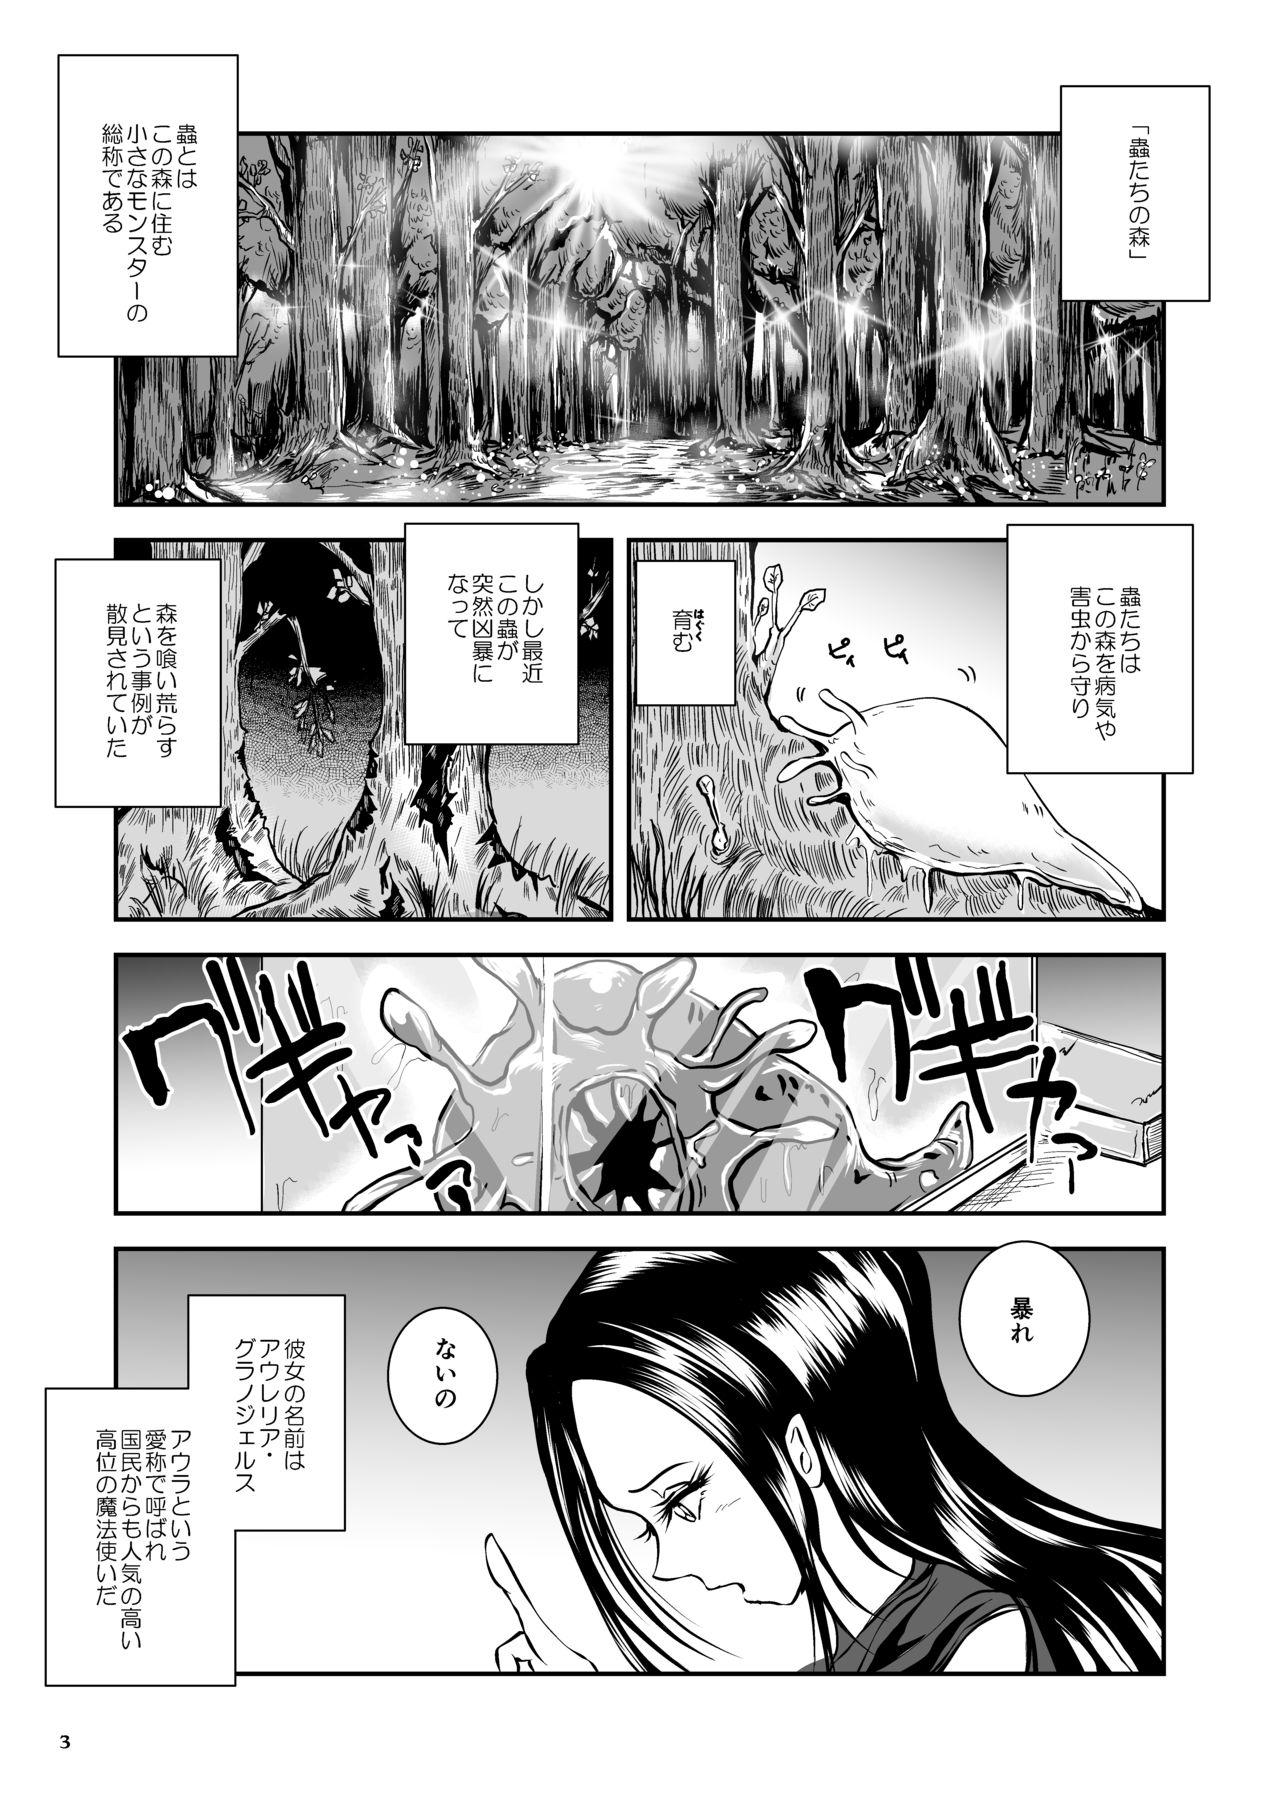 From Oonamekuji to Kurokami no Mahoutsukai - Parasitized Giant Slugs V.S. Sorceress of the Black Hair as Aura First Time - Page 3